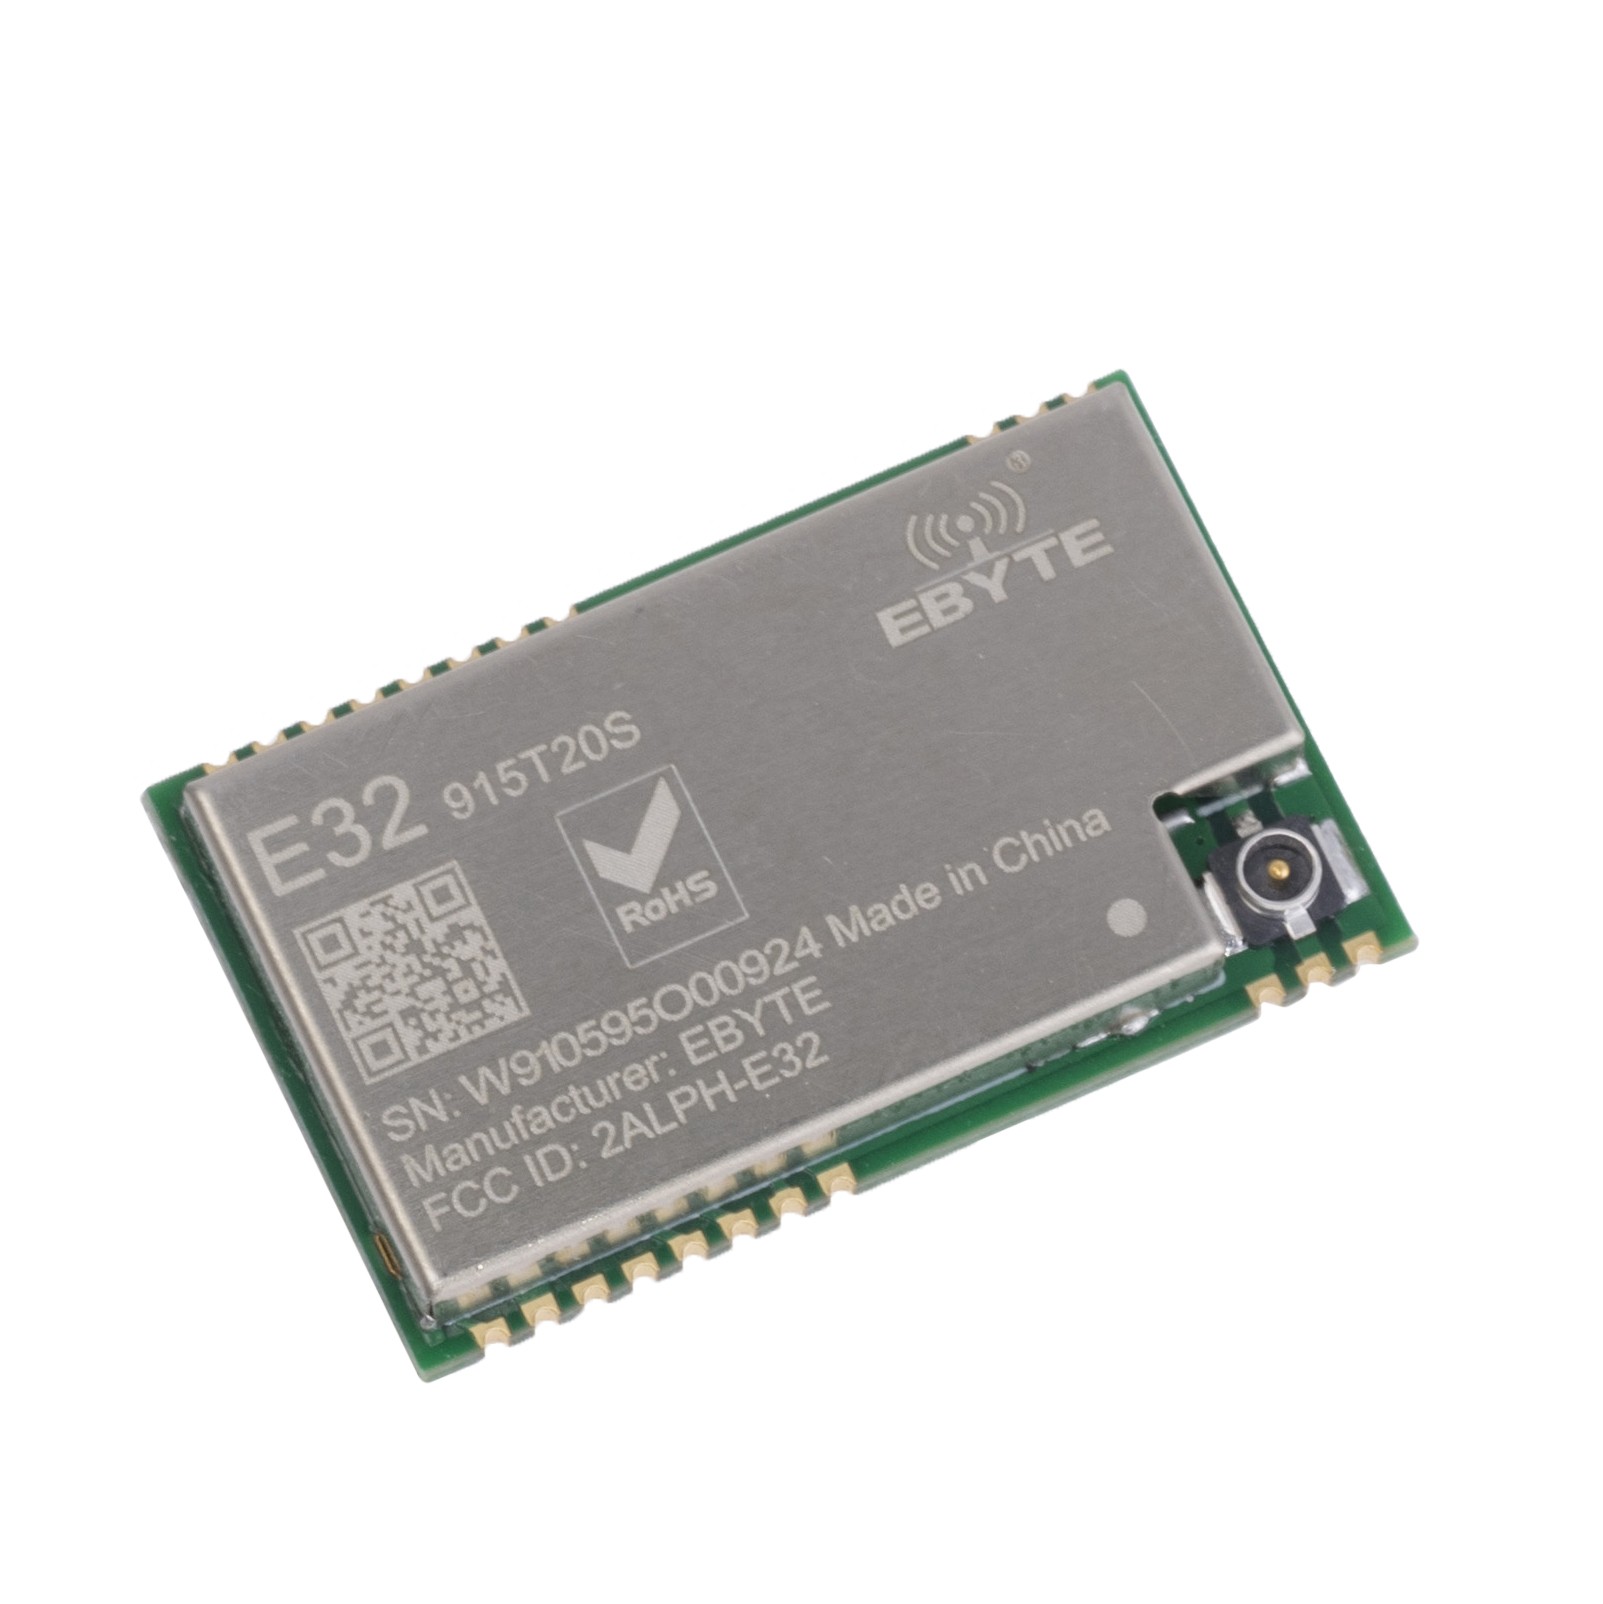 E32-915T20S (Ebyte) UART module on chip SX1276 915MHz SMD